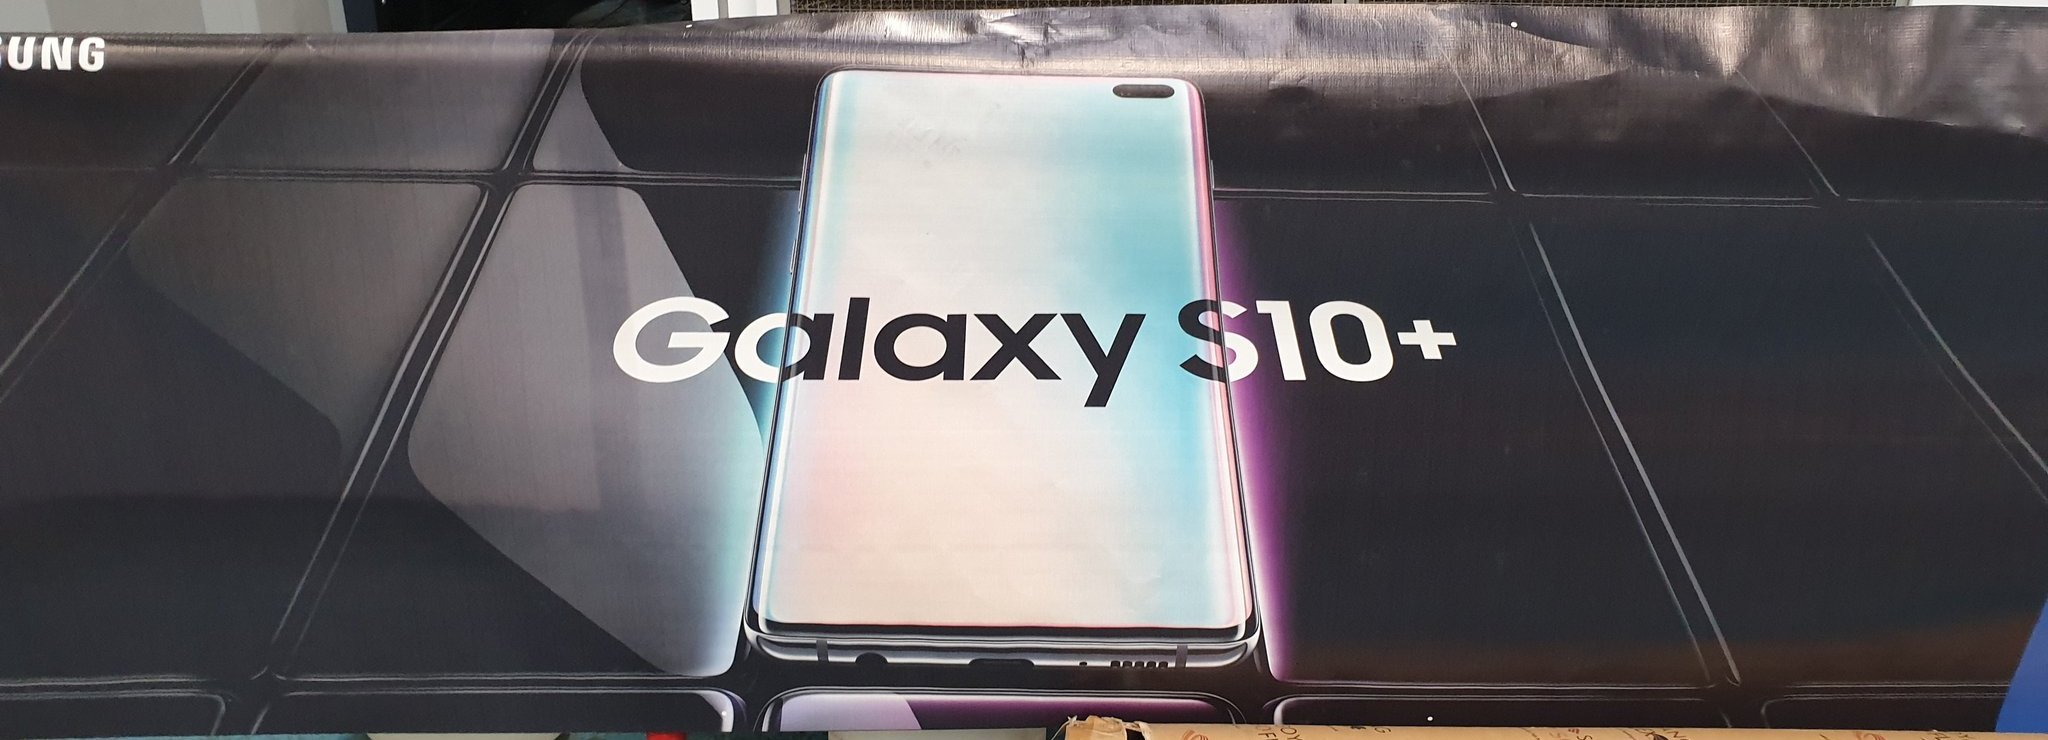 Samsung GALAXY S10 great news